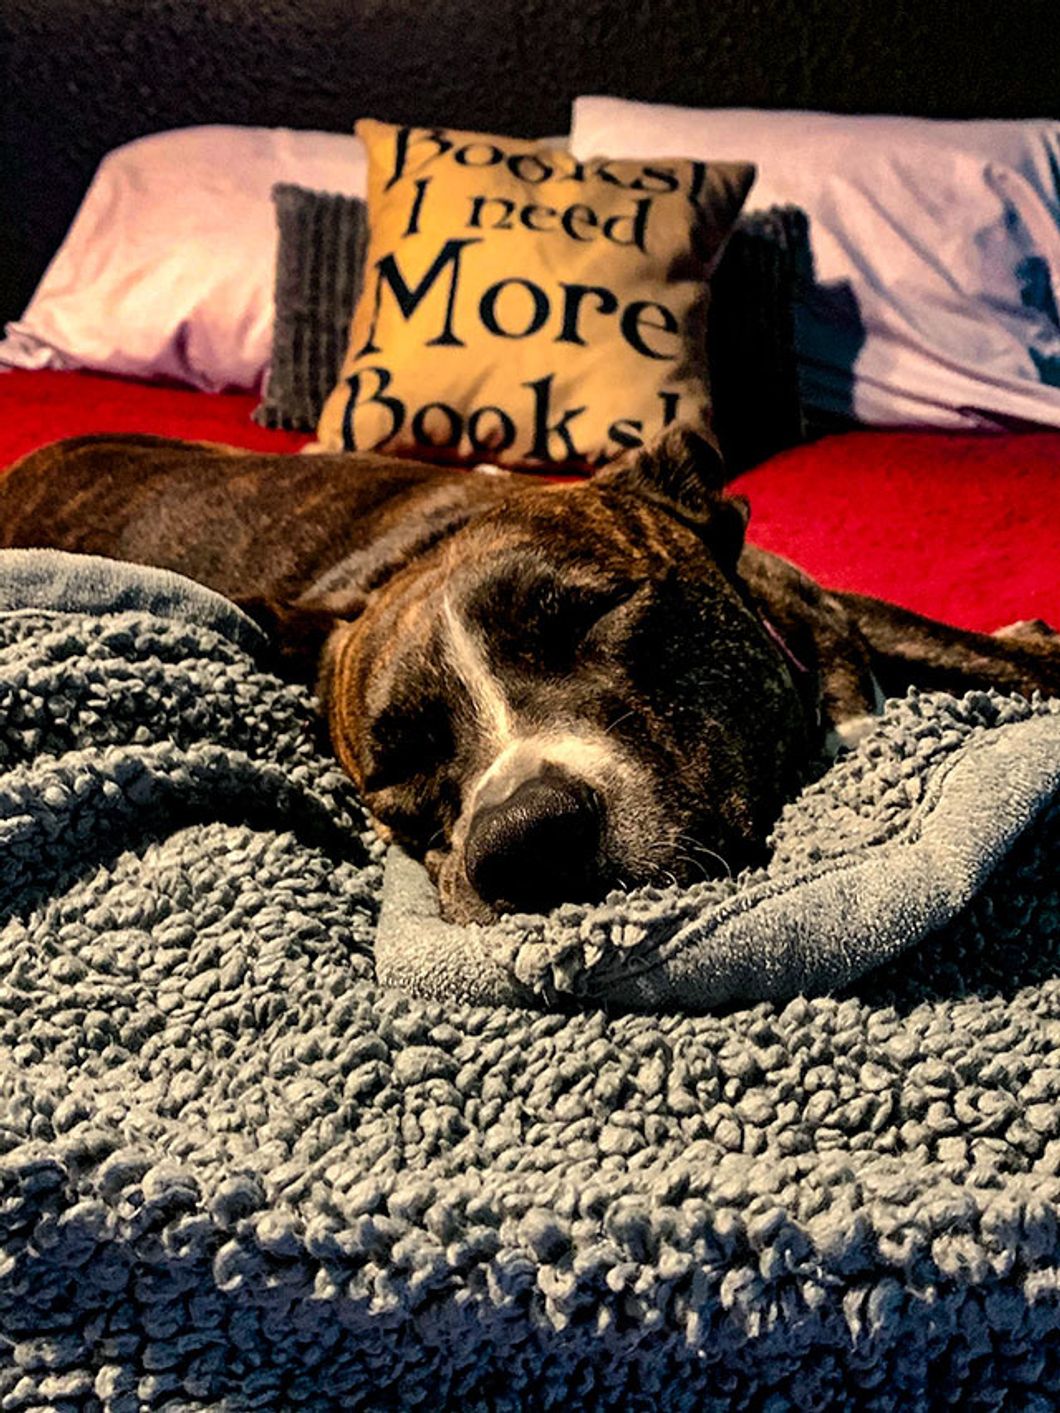 Dog with bristol coat sleeping on blanket